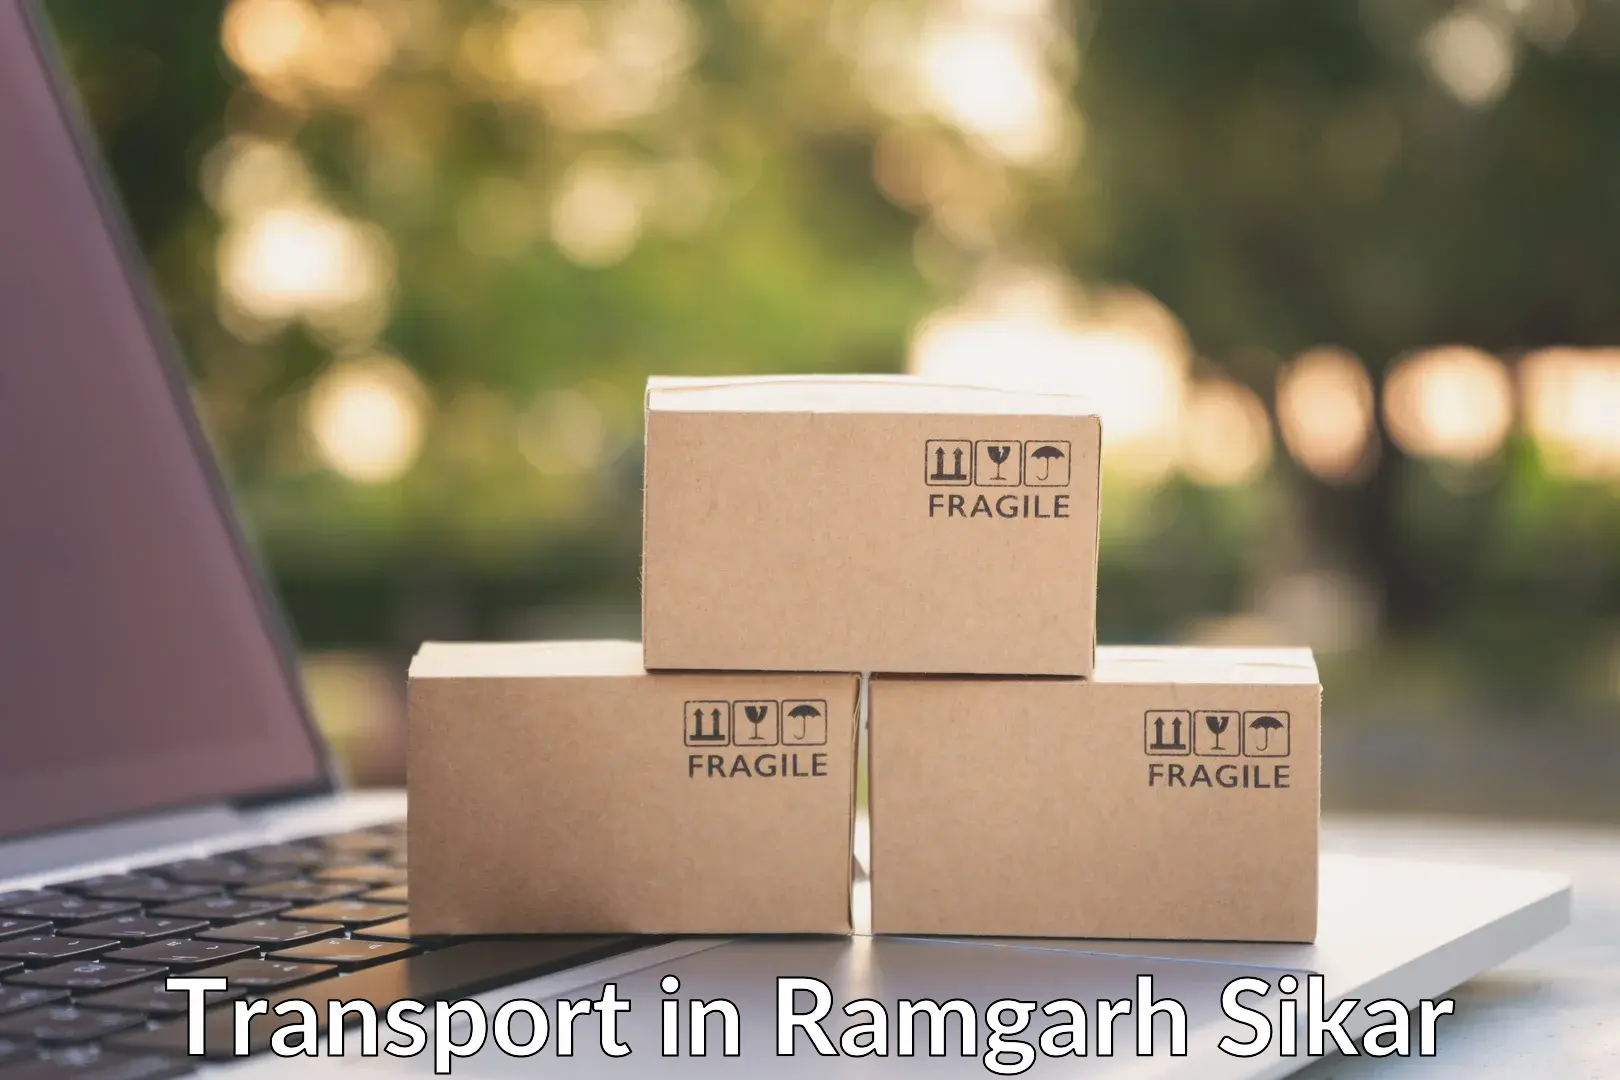 Online transport service in Ramgarh Sikar